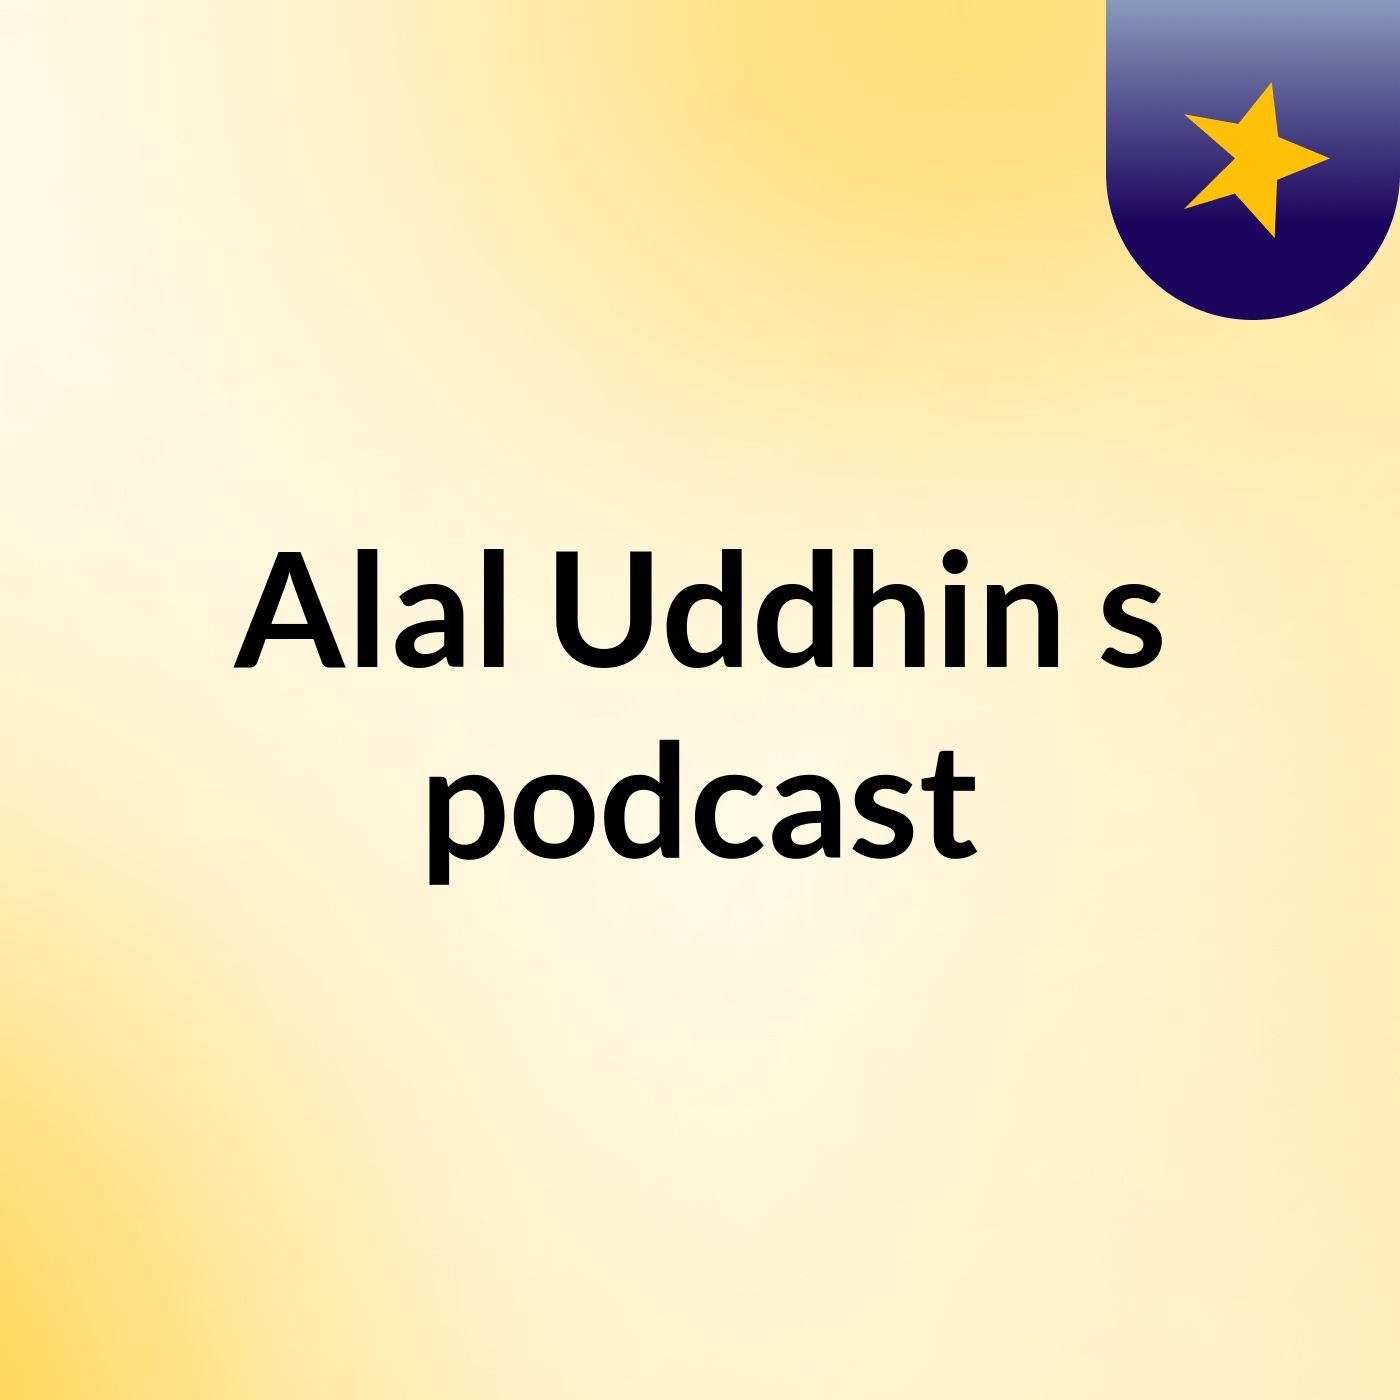 Episode 3 - Alal Uddhin's podcast